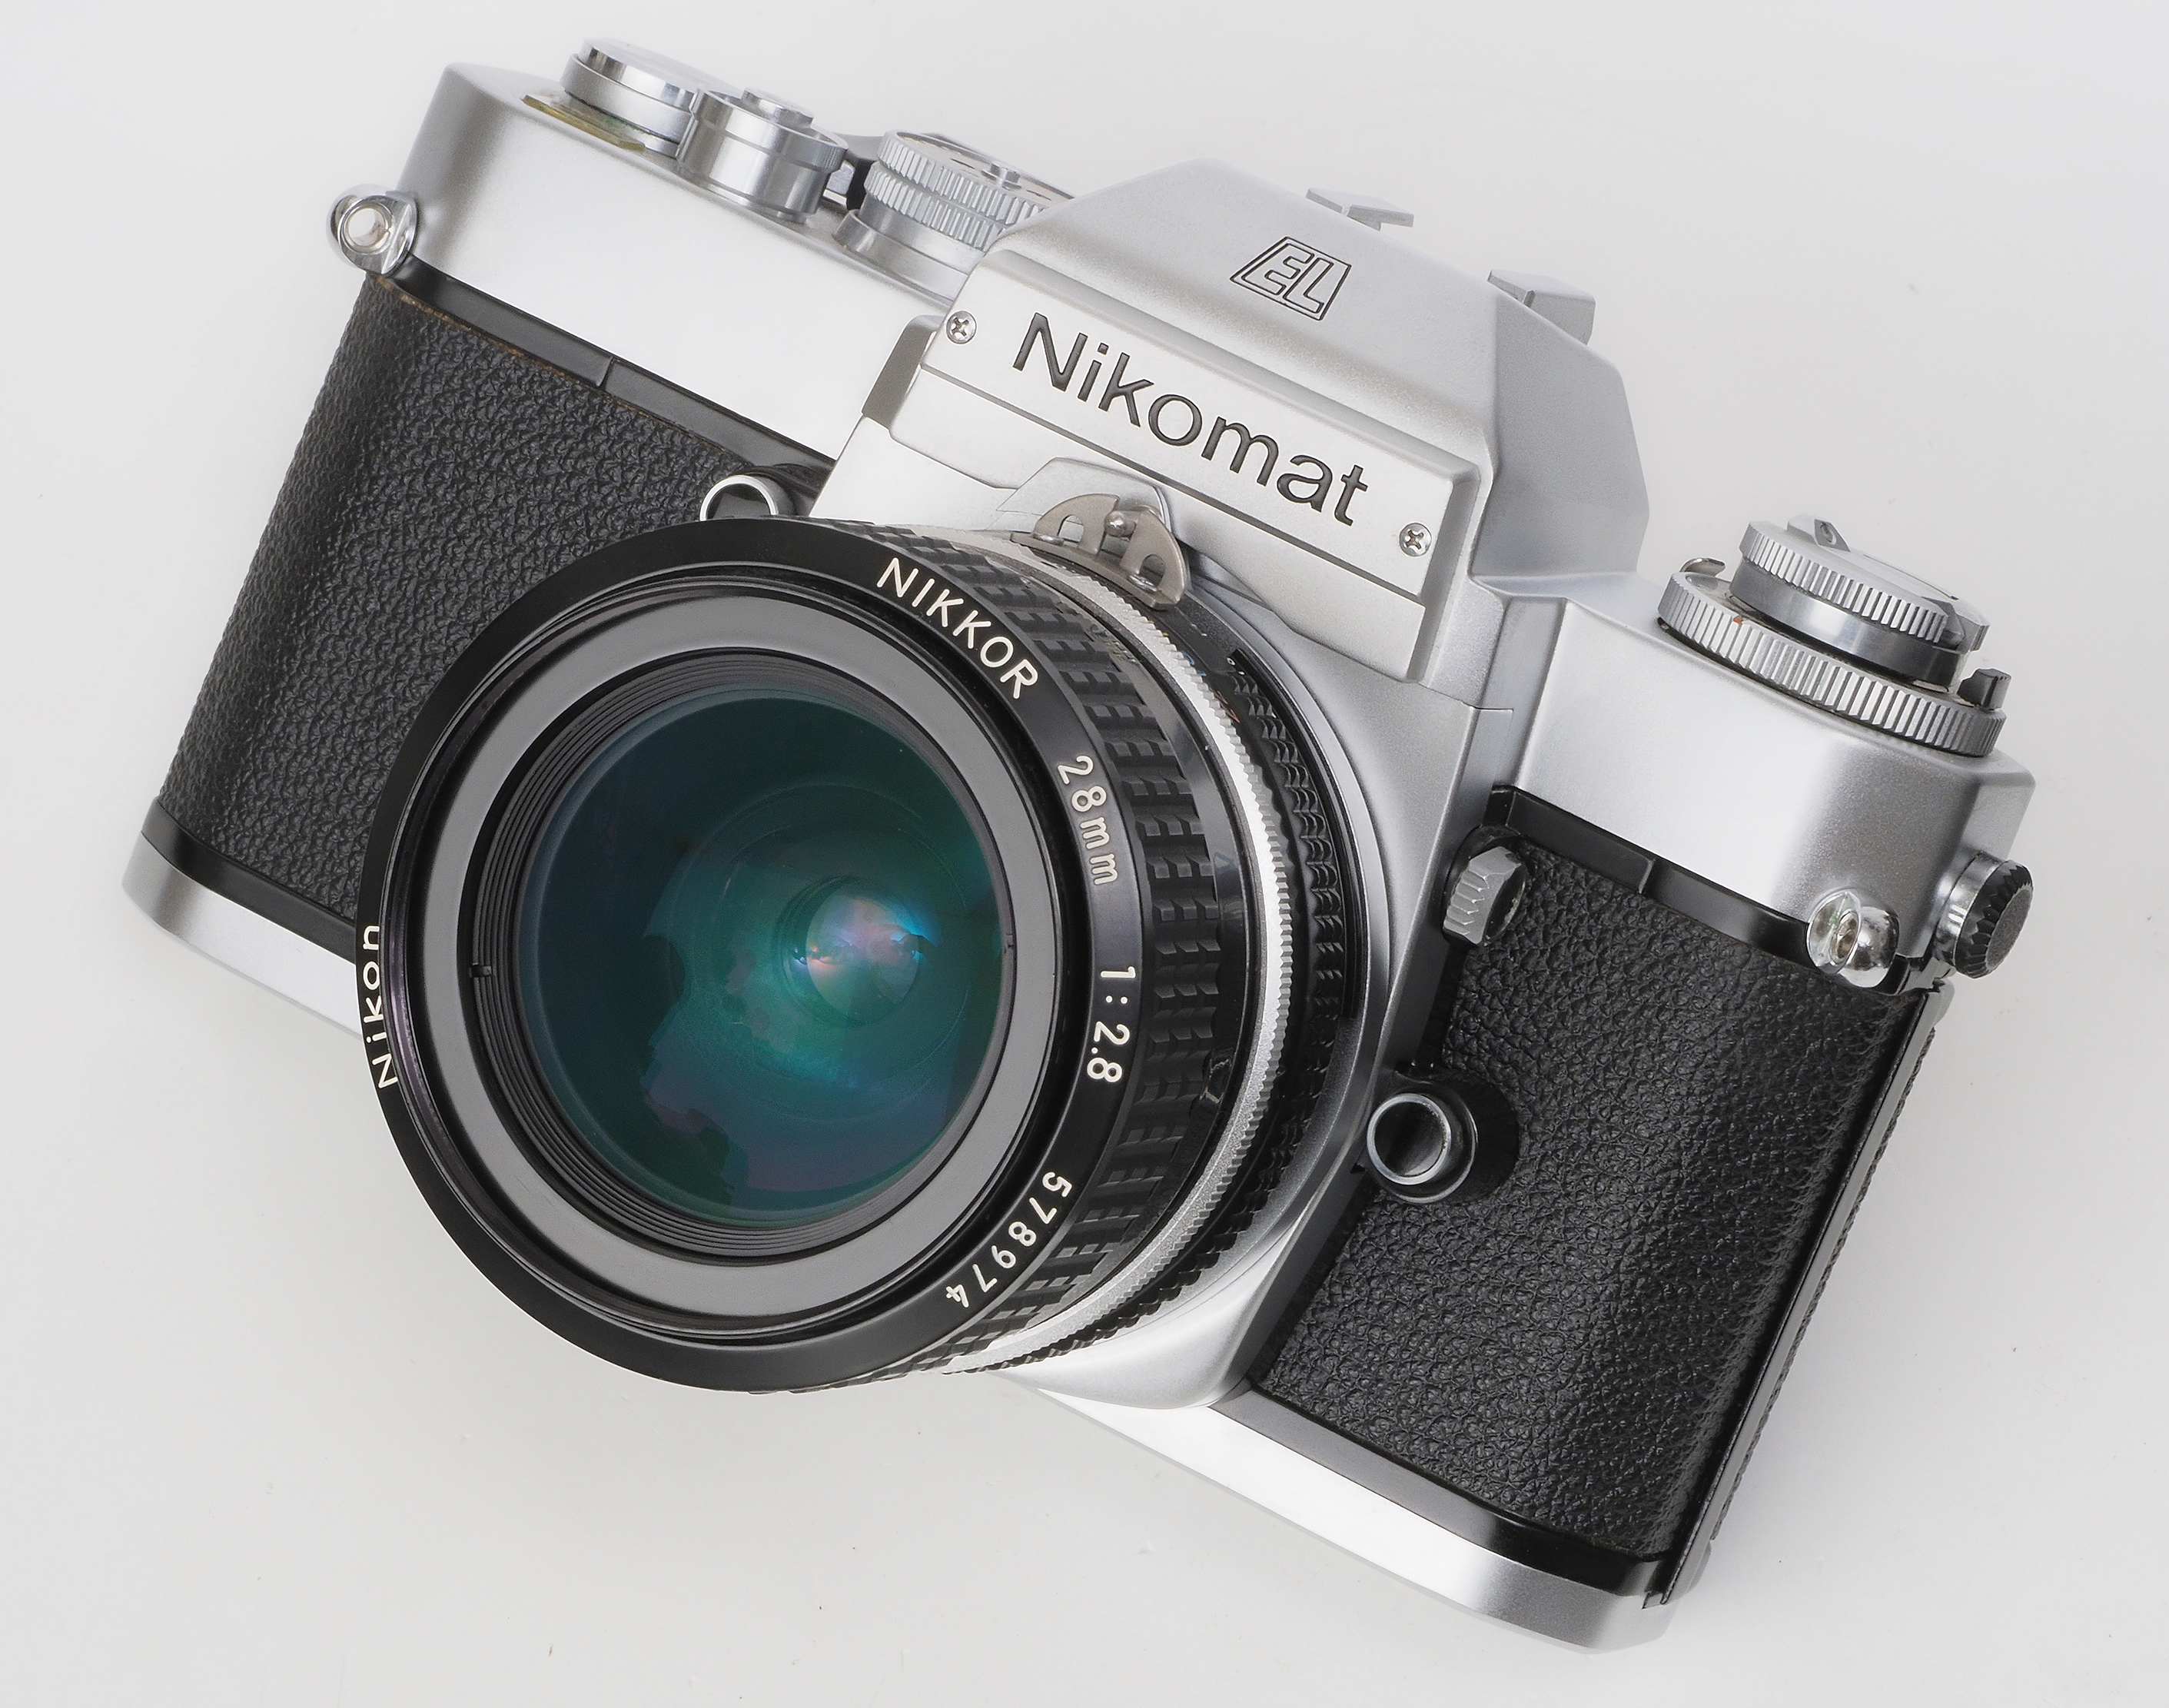 noncameraニコン Nikomat FTN + Nikkor 28mm f2.8 【試写済】